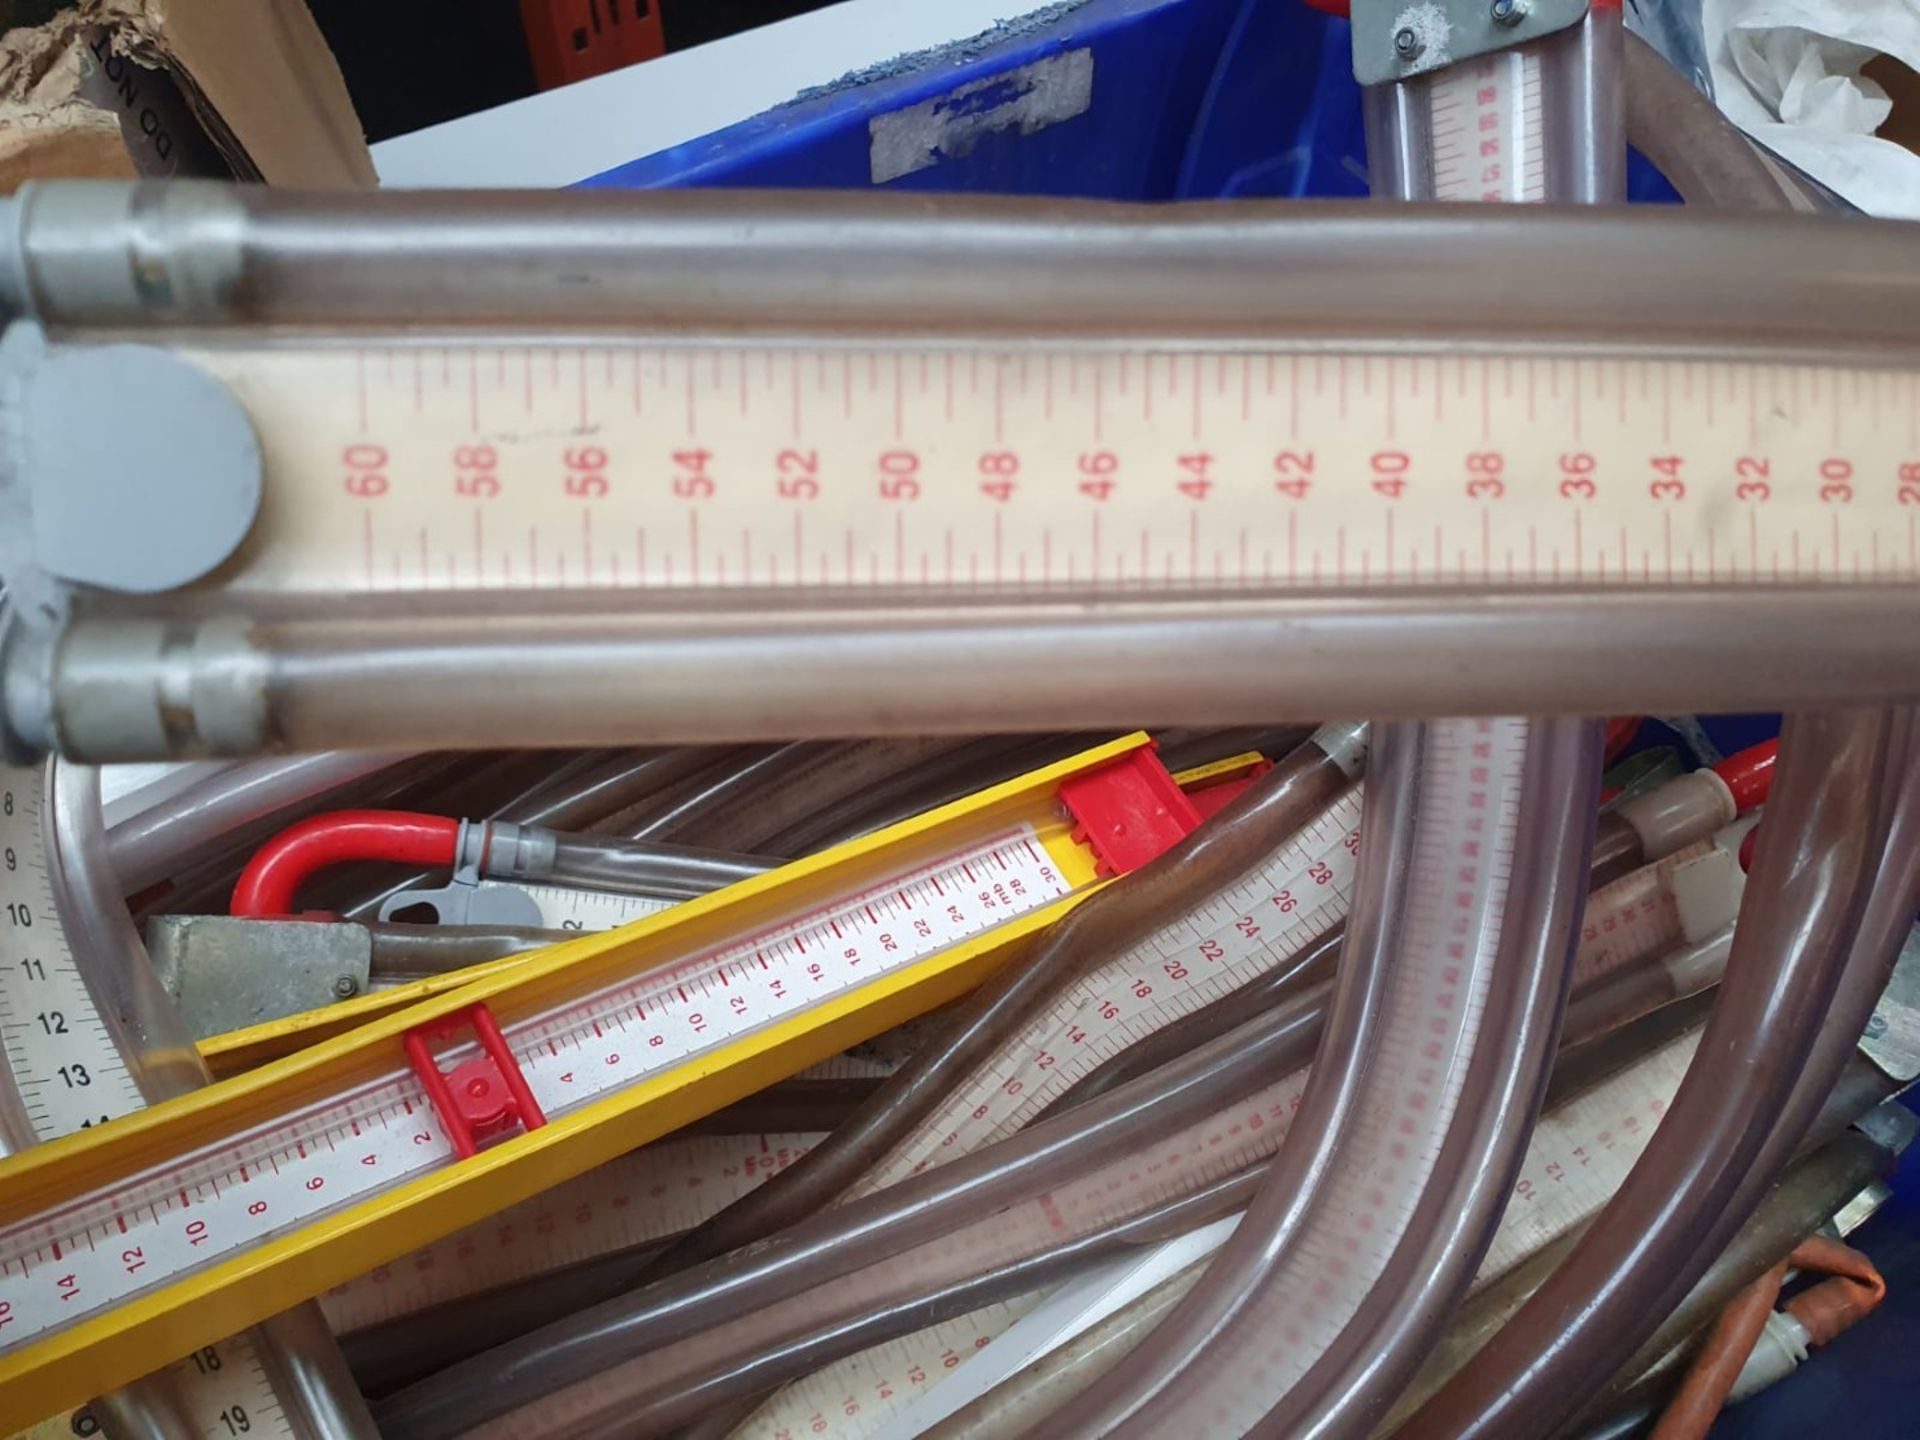 Job Lot Of U-Gauge Manometer / Pressure Measuring Instruments - Pre-owned Items - Low Start - Image 4 of 4